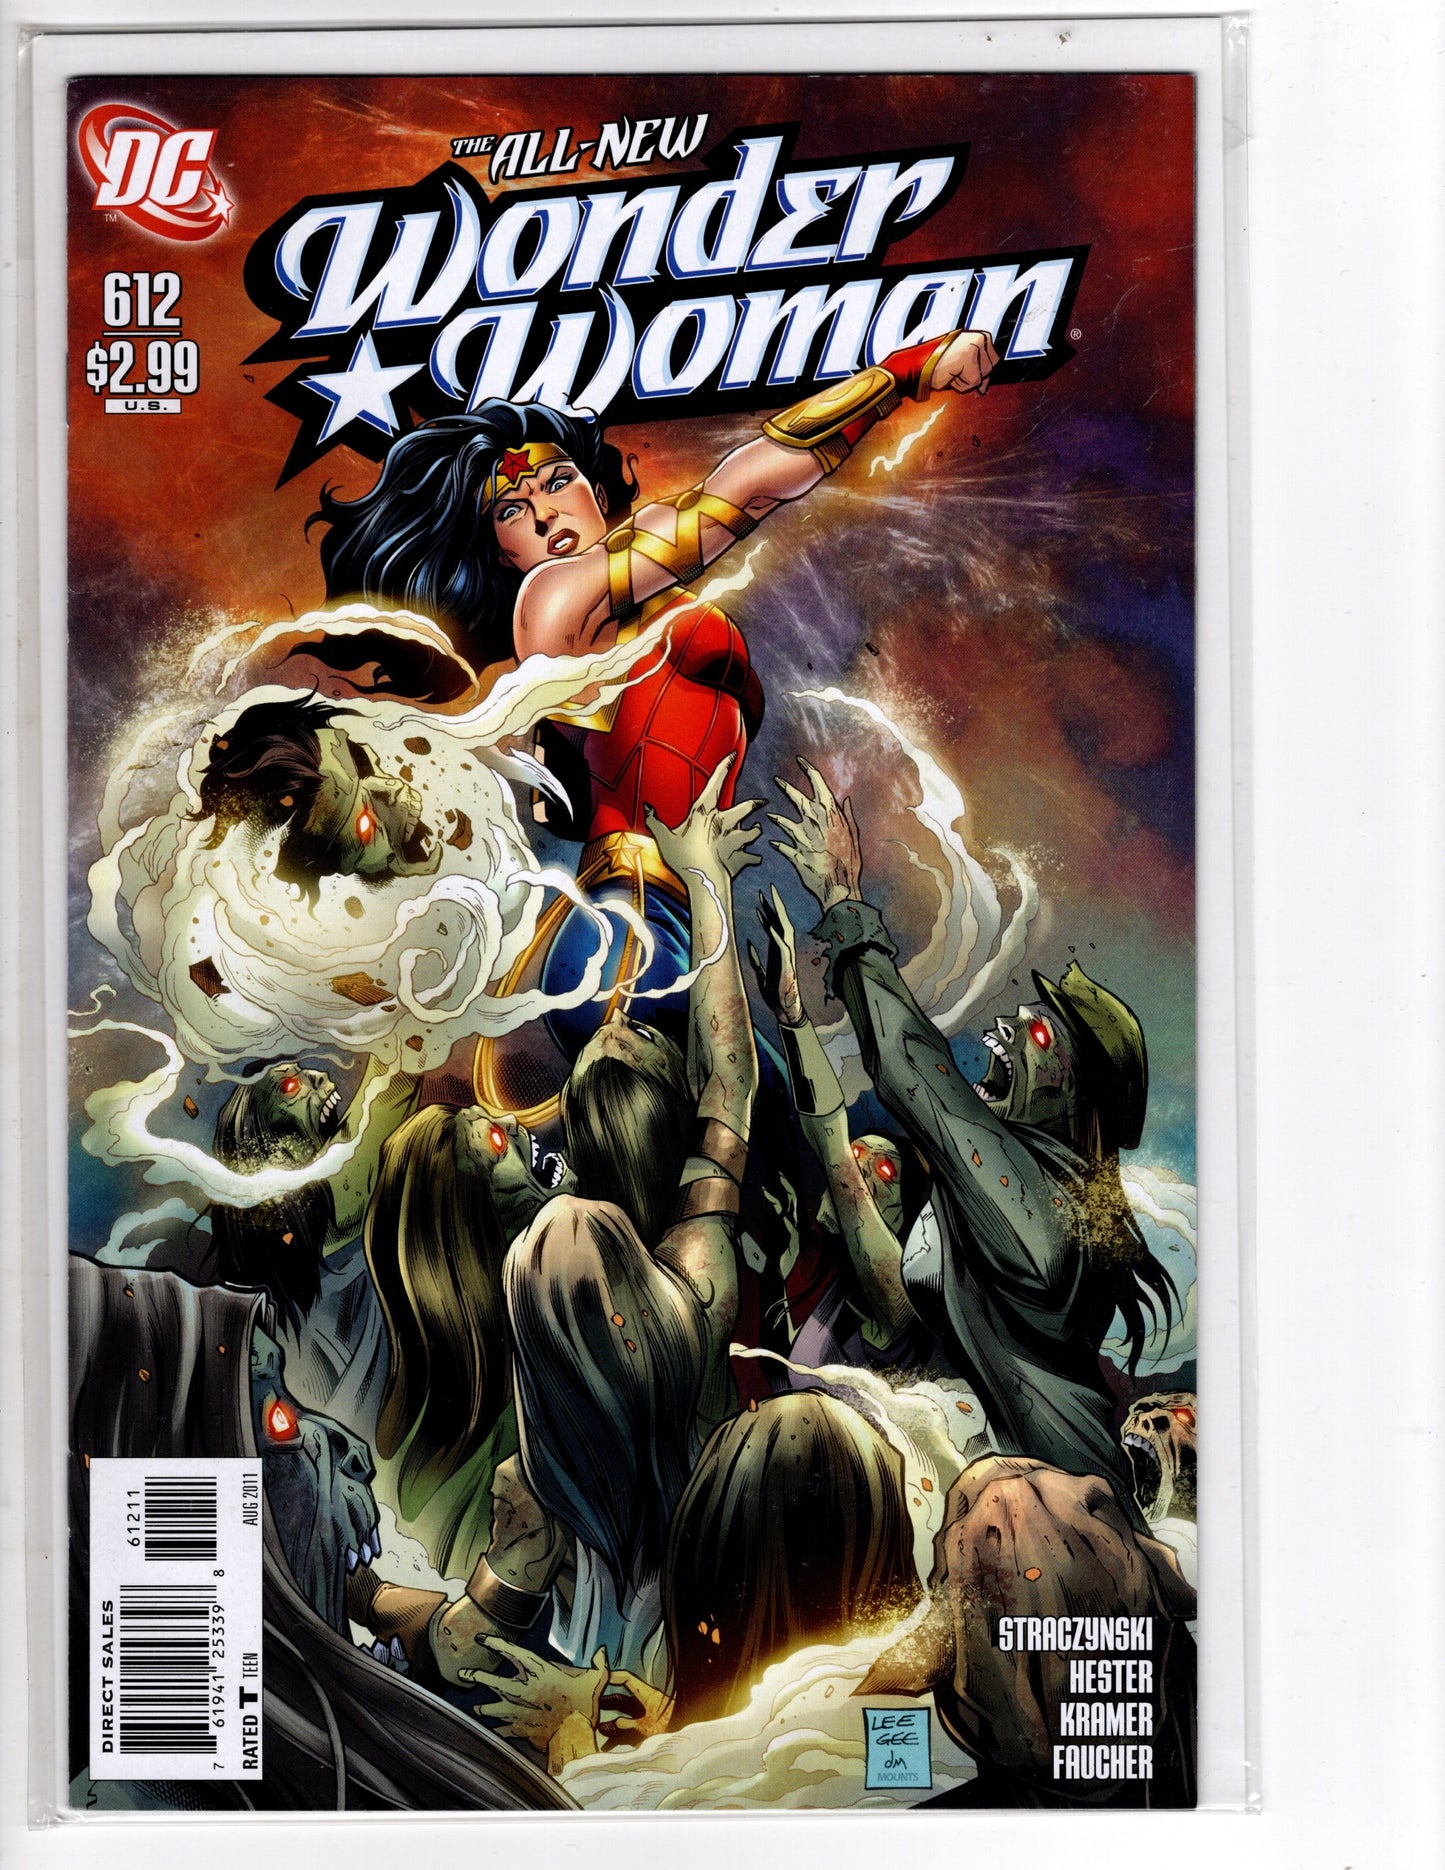 All New Wonder Woman #612